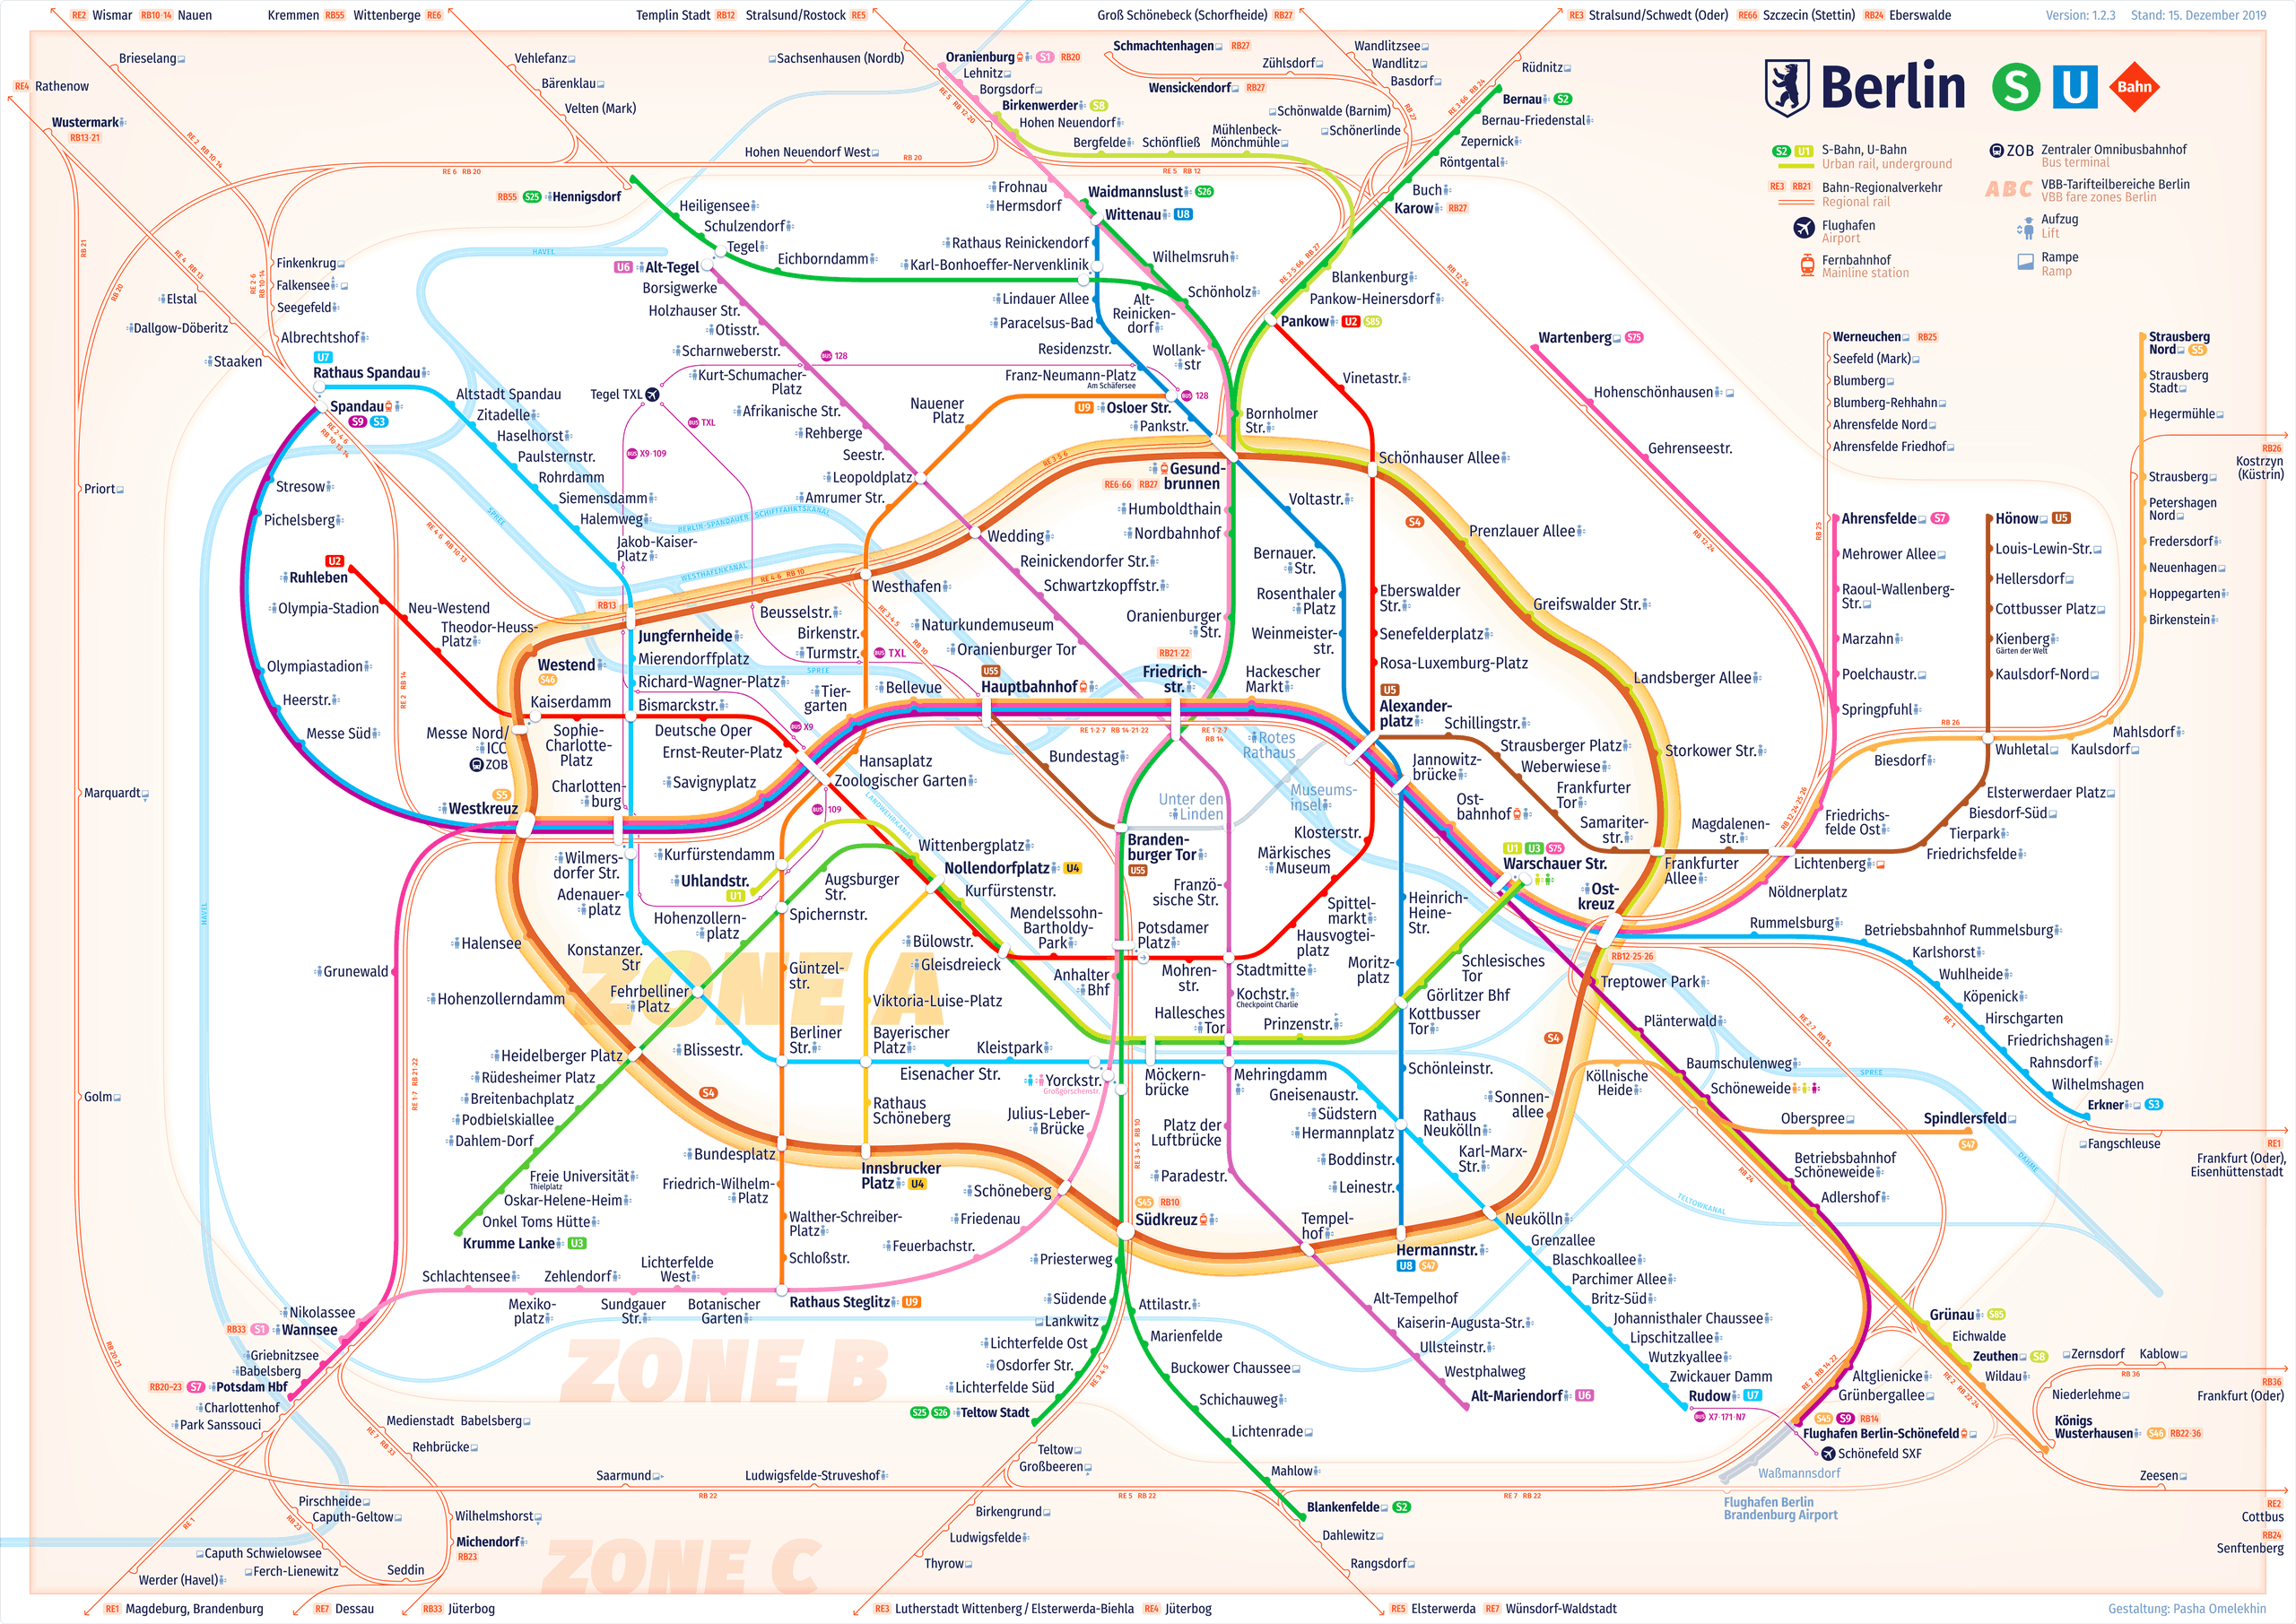 Berlin Metro Map with U-Bahn and S-Bahn